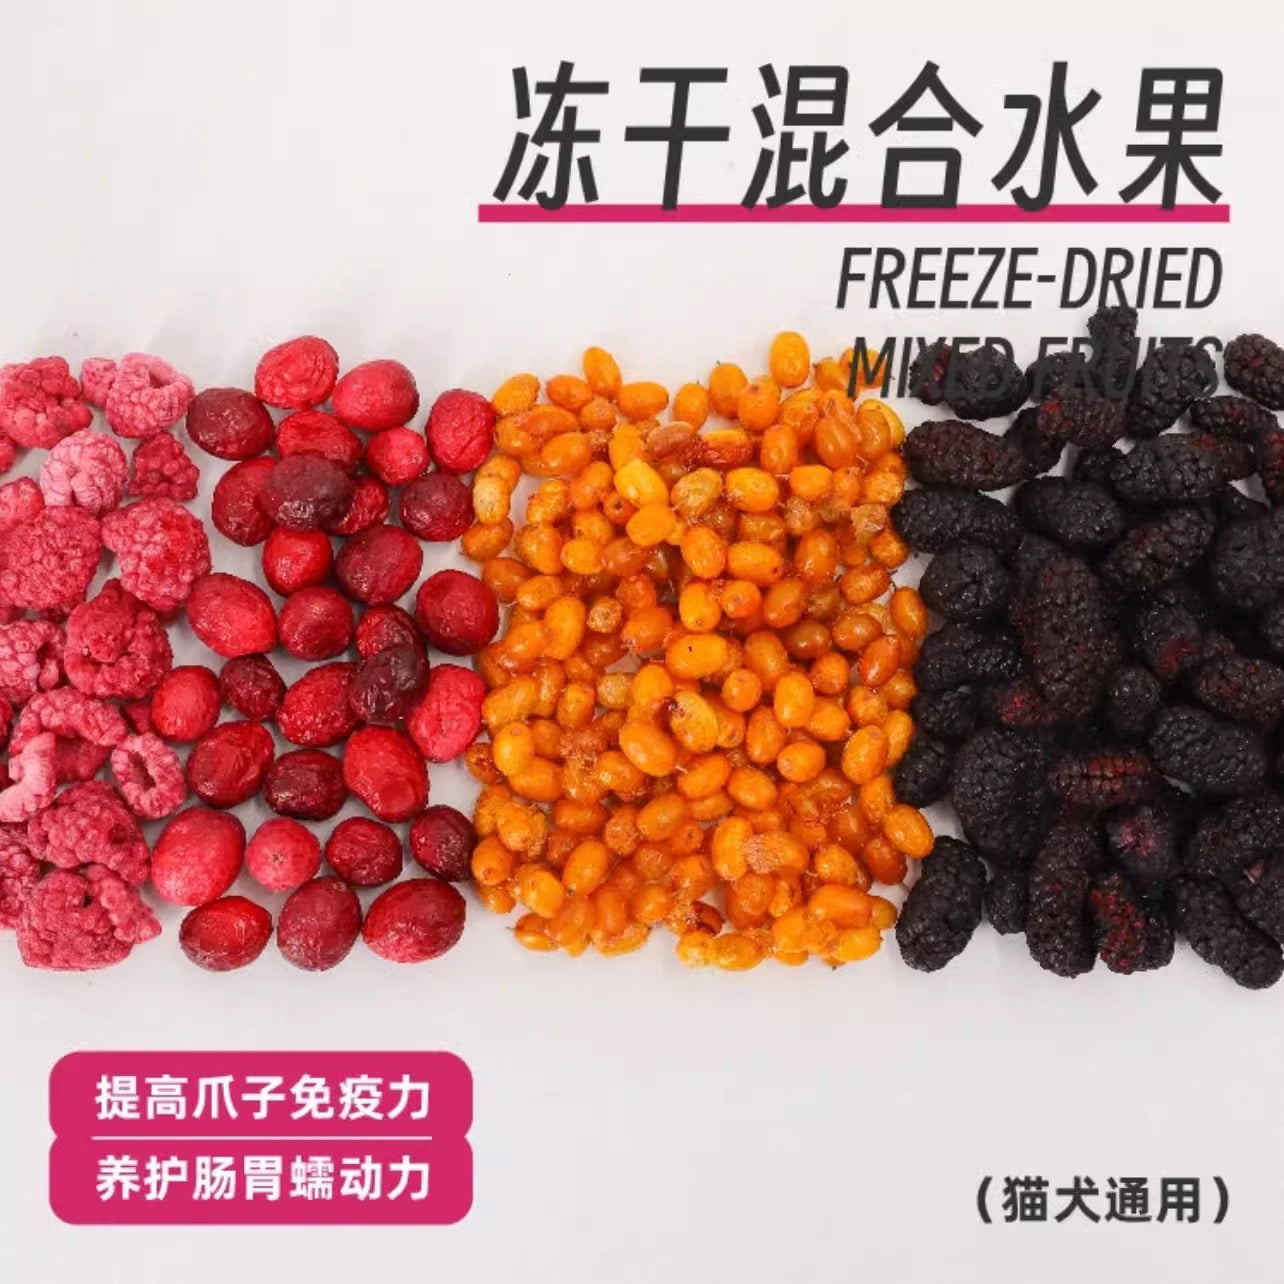 PRIMITIVE PAWS Freeze Fried Mixed Fruits